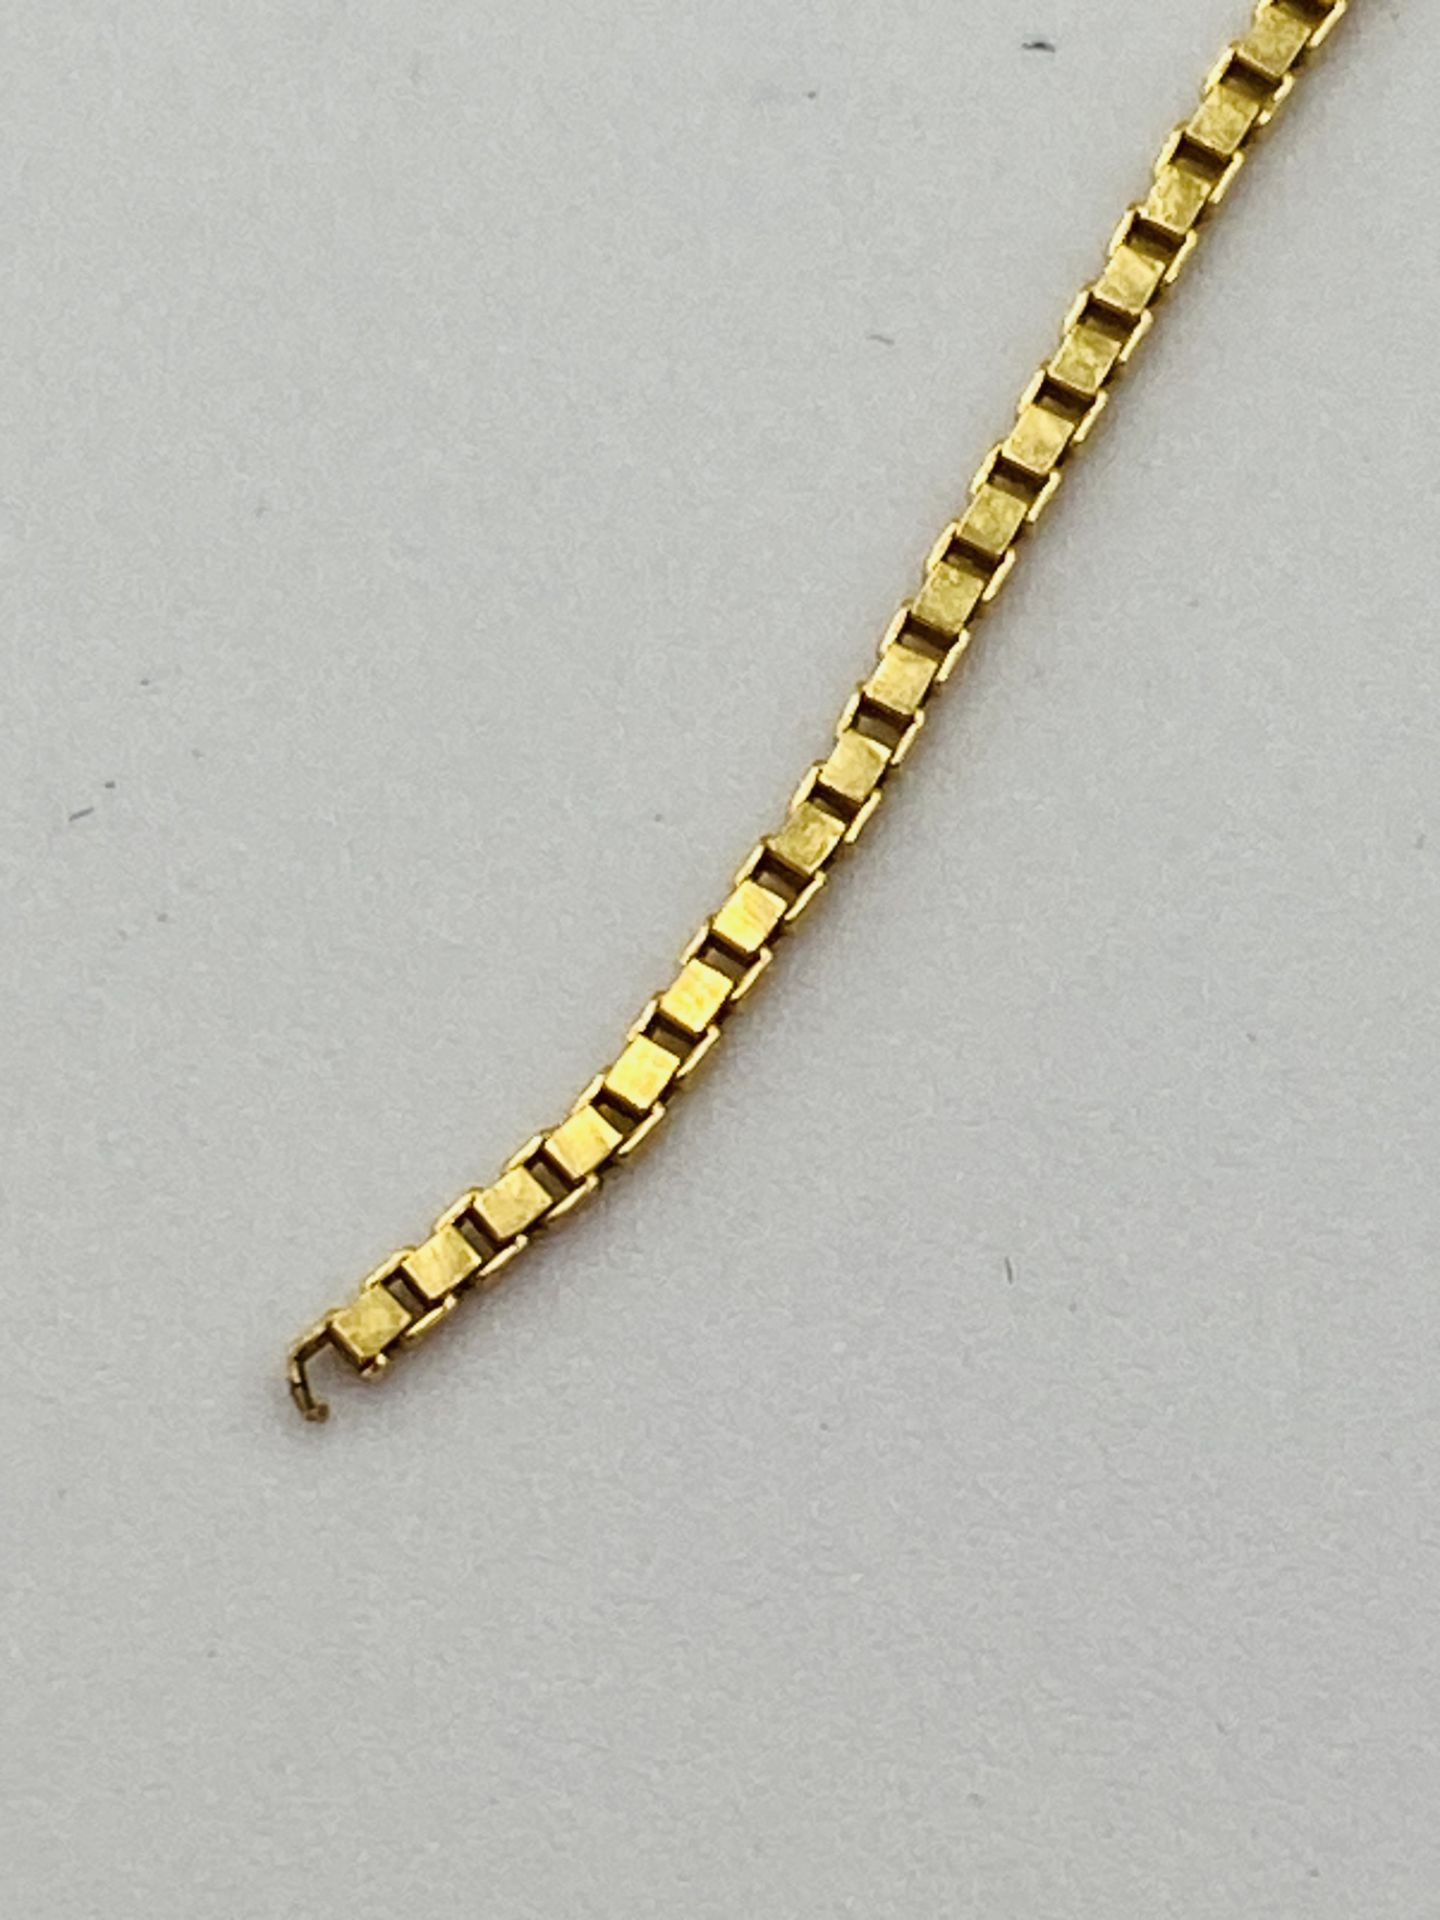 9ct fine gold chain - Image 3 of 4